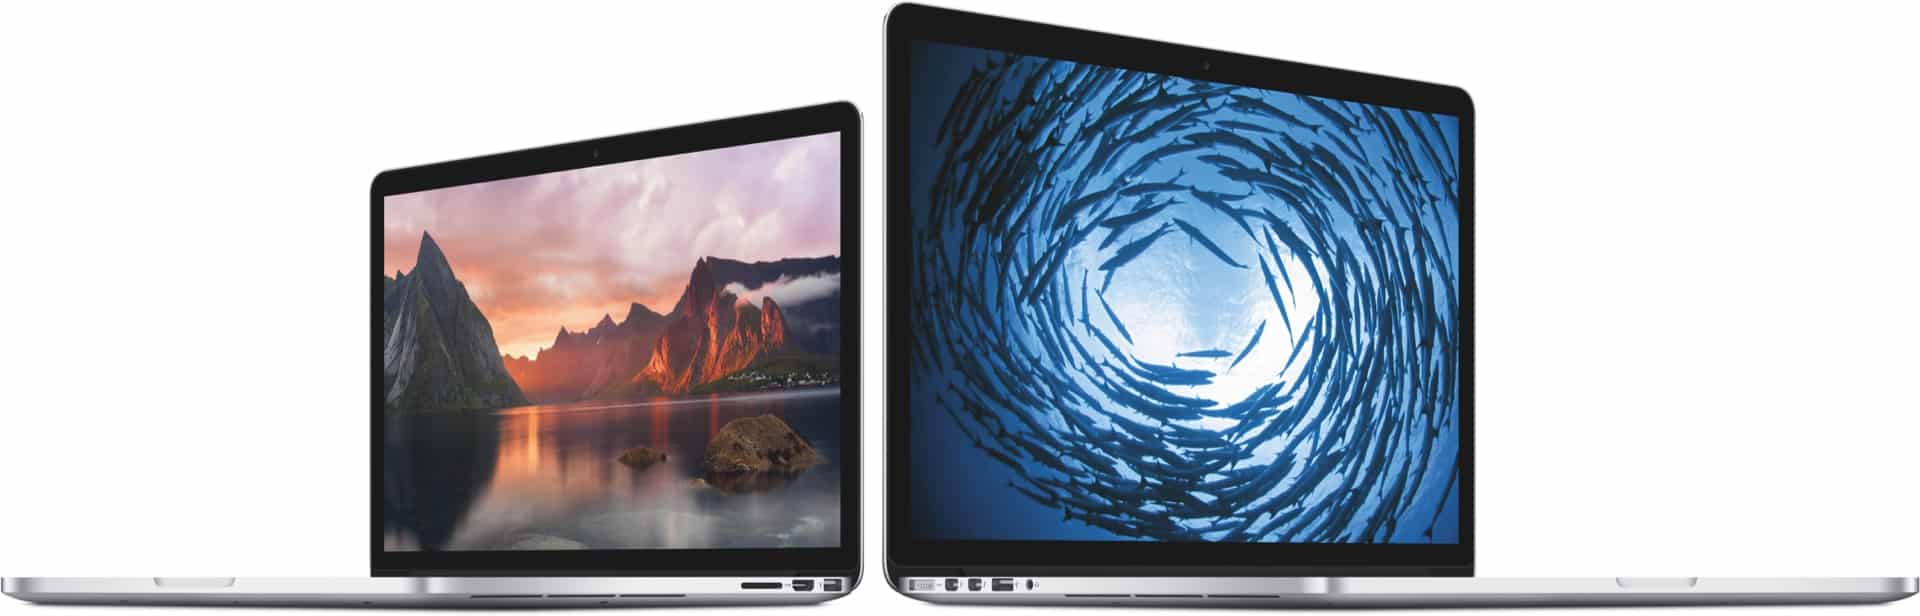 Novo MacBook Pro com tela Retina